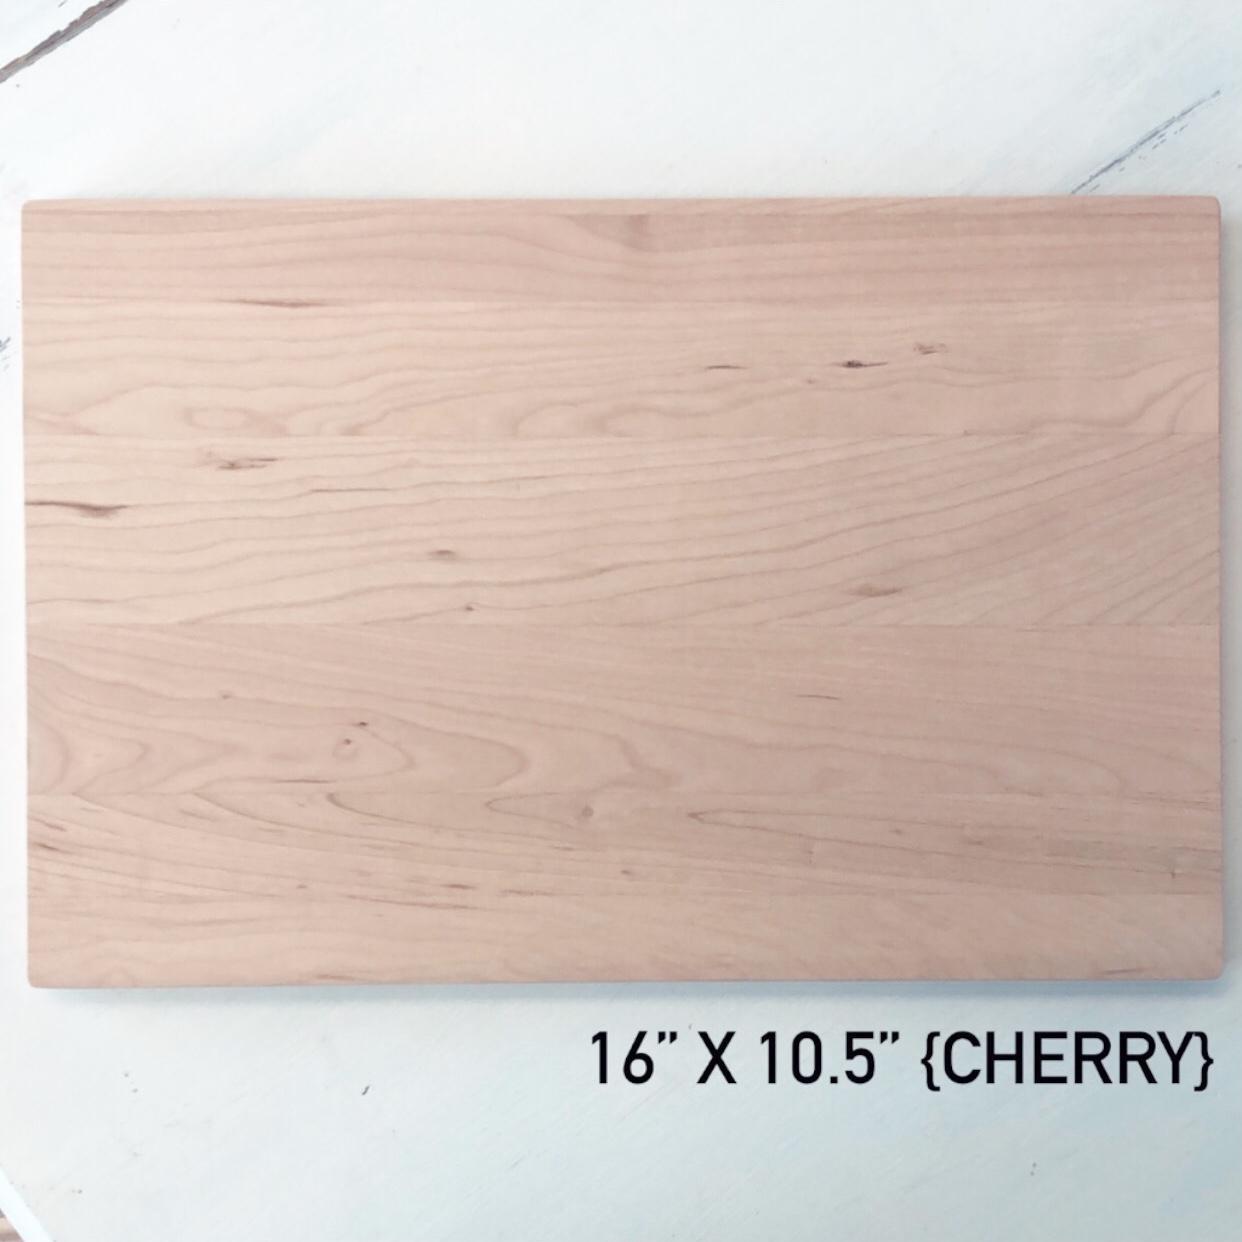 Personalized cutting board - Design 16